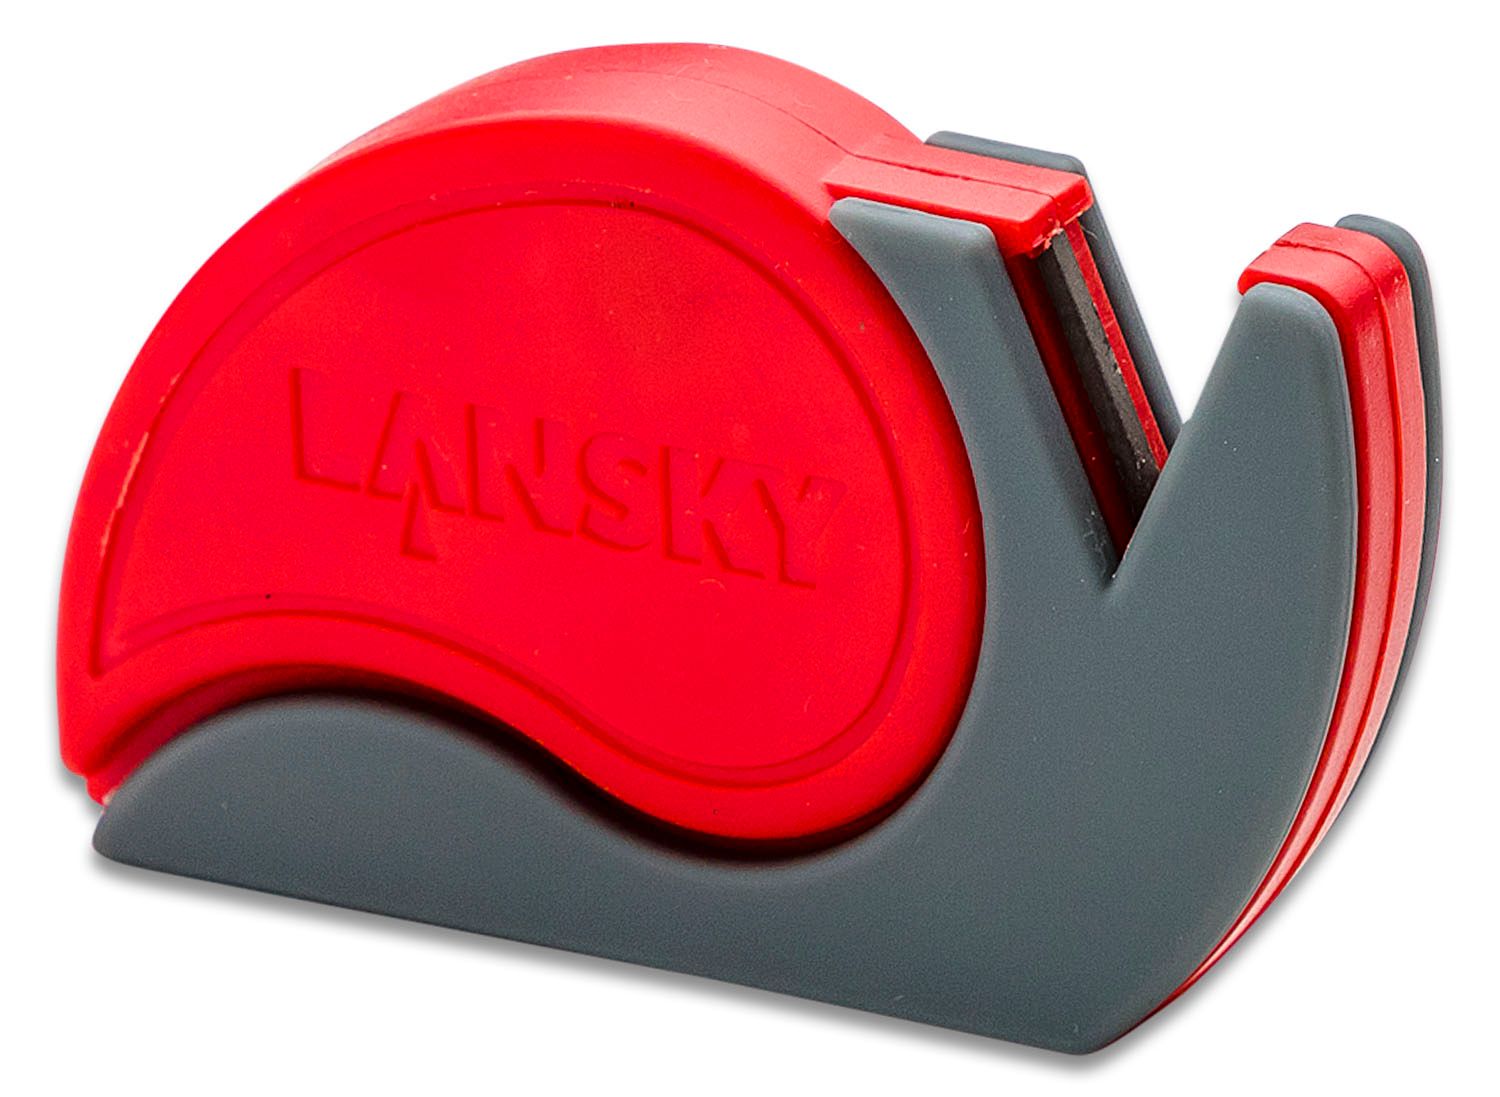 LANSKY Quadsharp Sharpener - Great Outdoor Shop